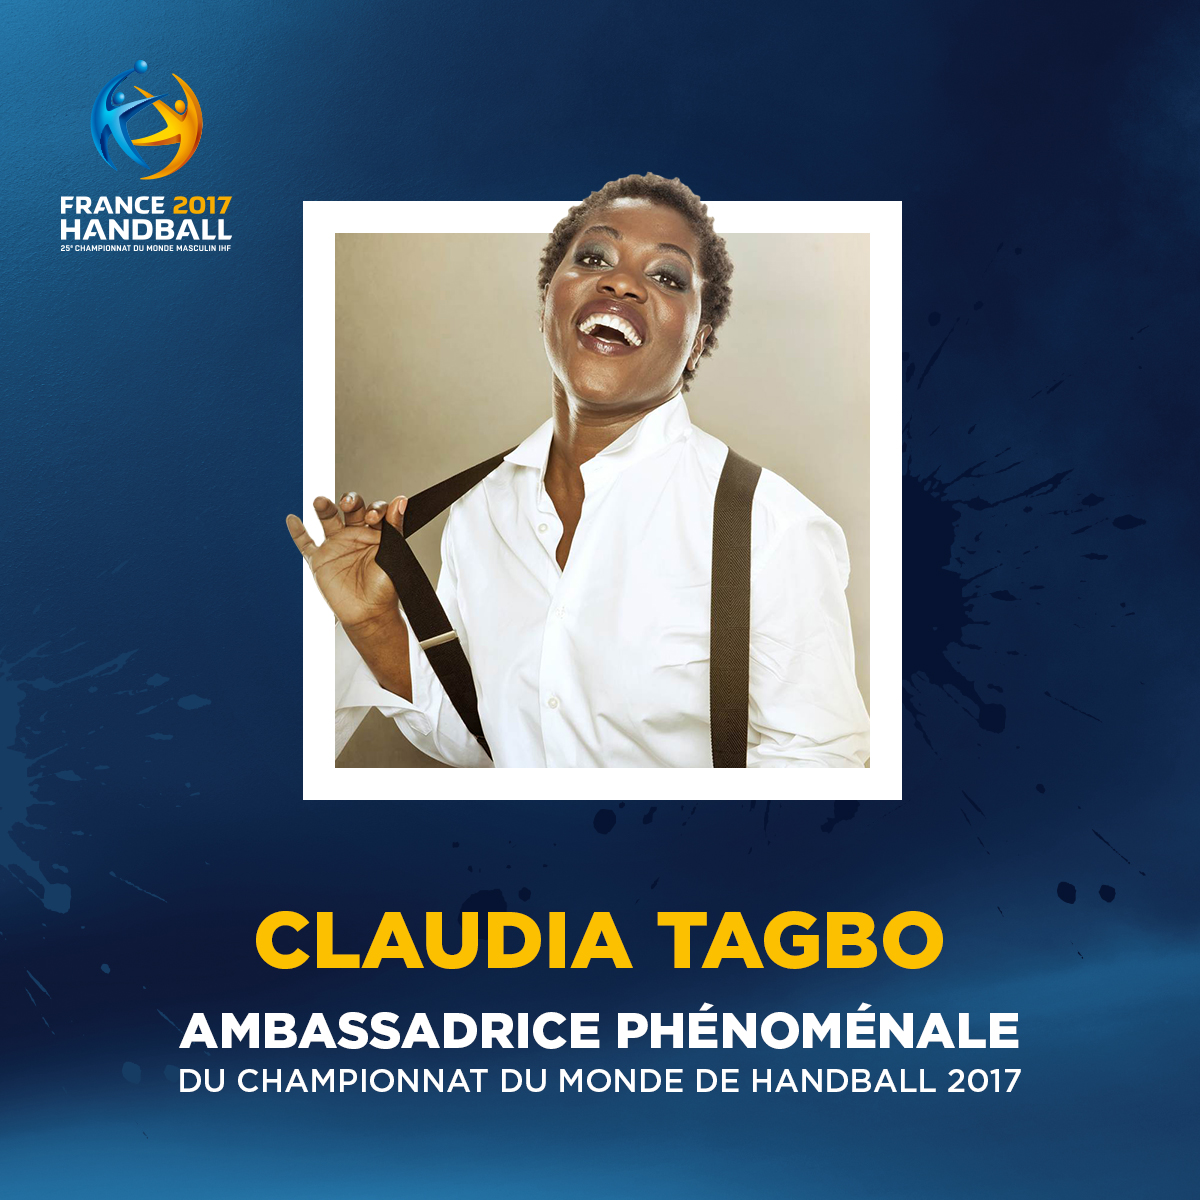 claudia tagbo ambassadrice championnat du monde handball 2017 france